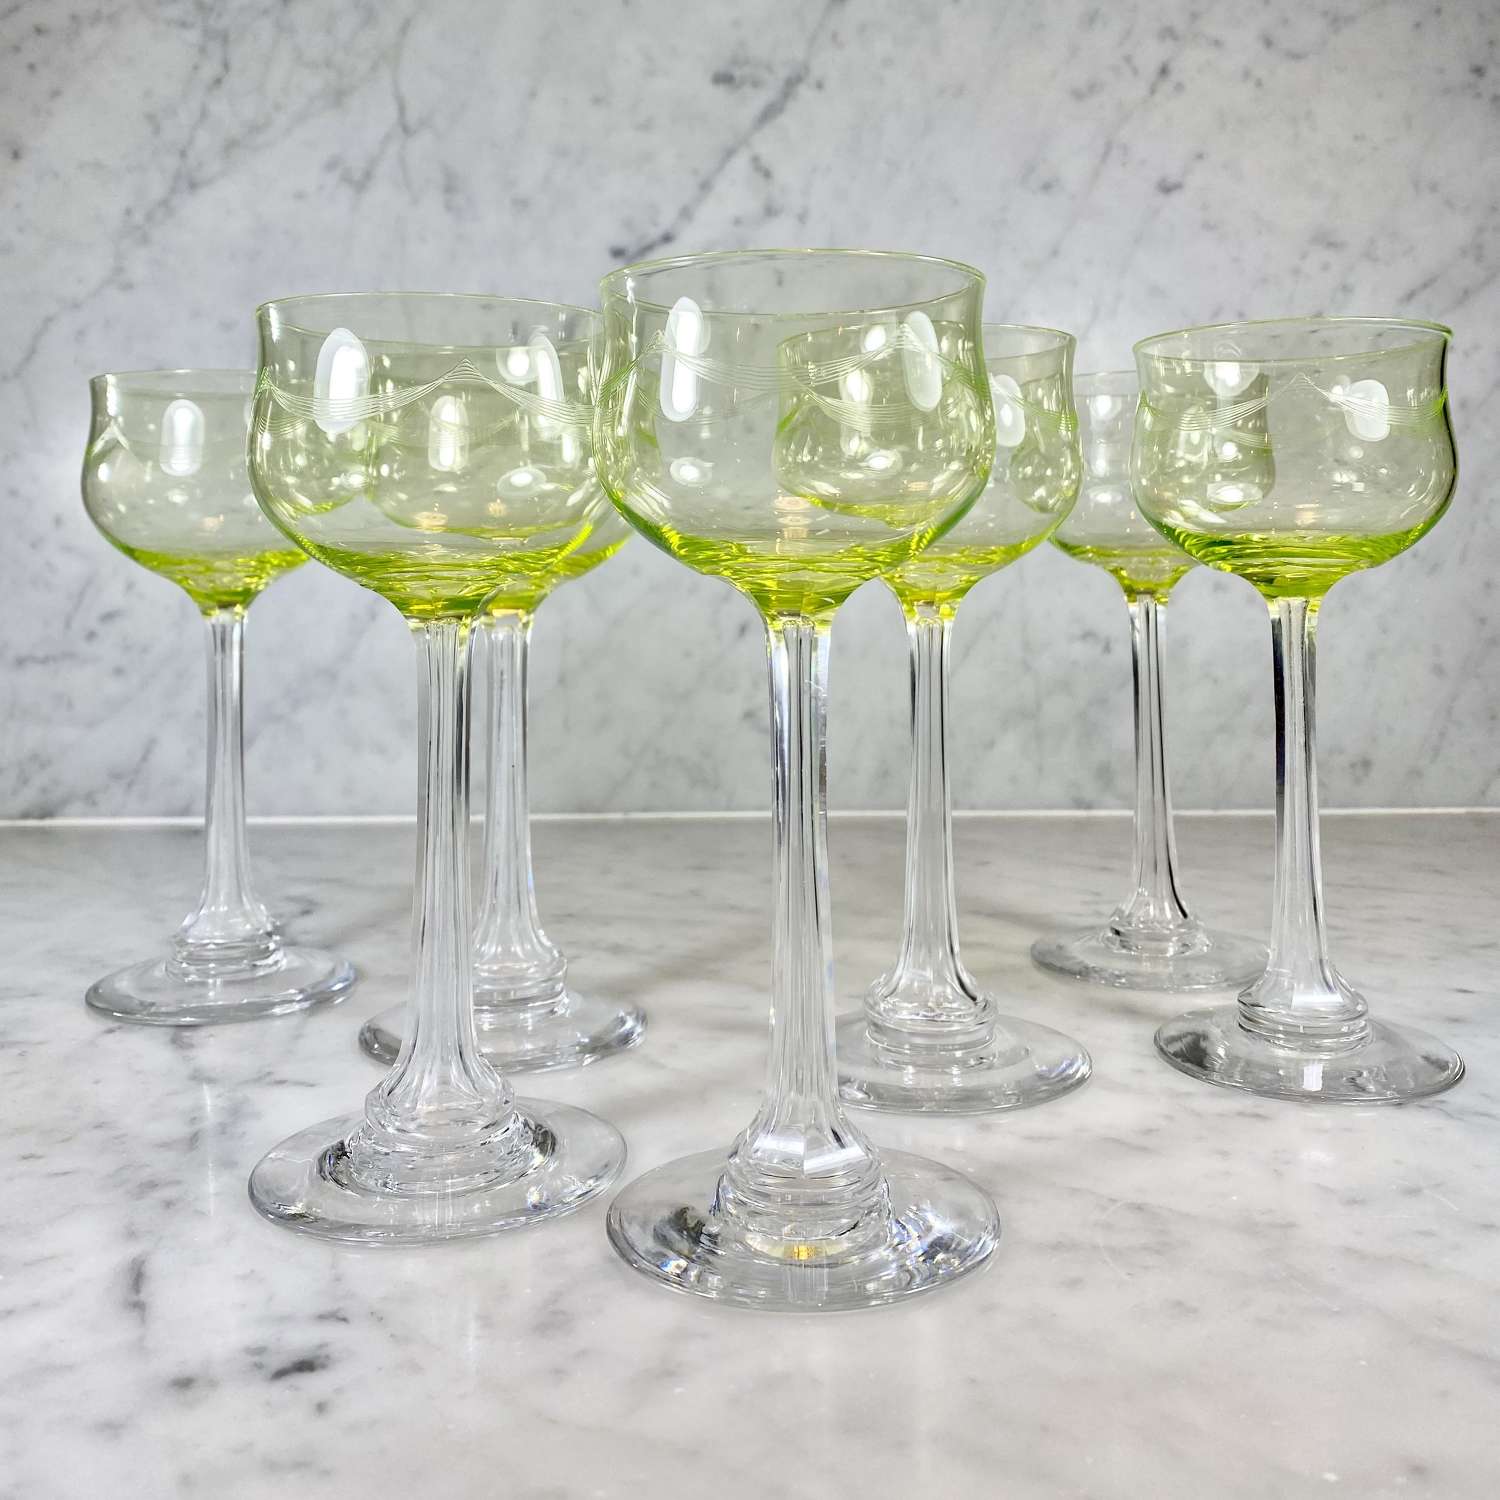 Set of Austrian Uranium hock glasses with opaque stems